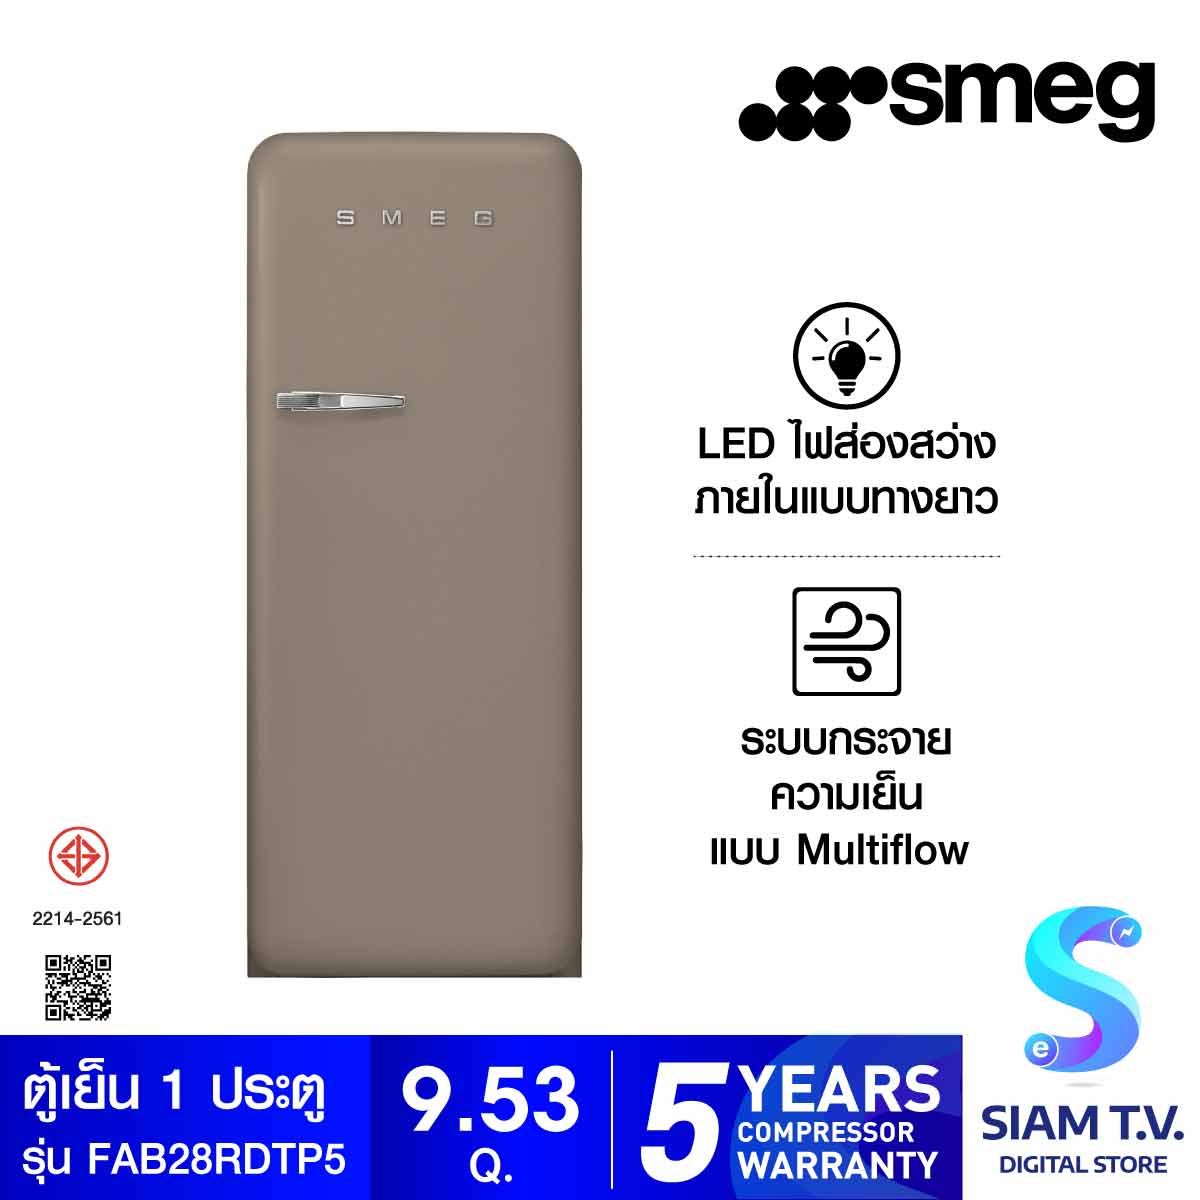 SMEG ตู้เย็น 1 ประตู 9.53 Q.  สไตล์ 50 Retro Aesthetic รุ่น FAB28RDTP5 สี Taupe